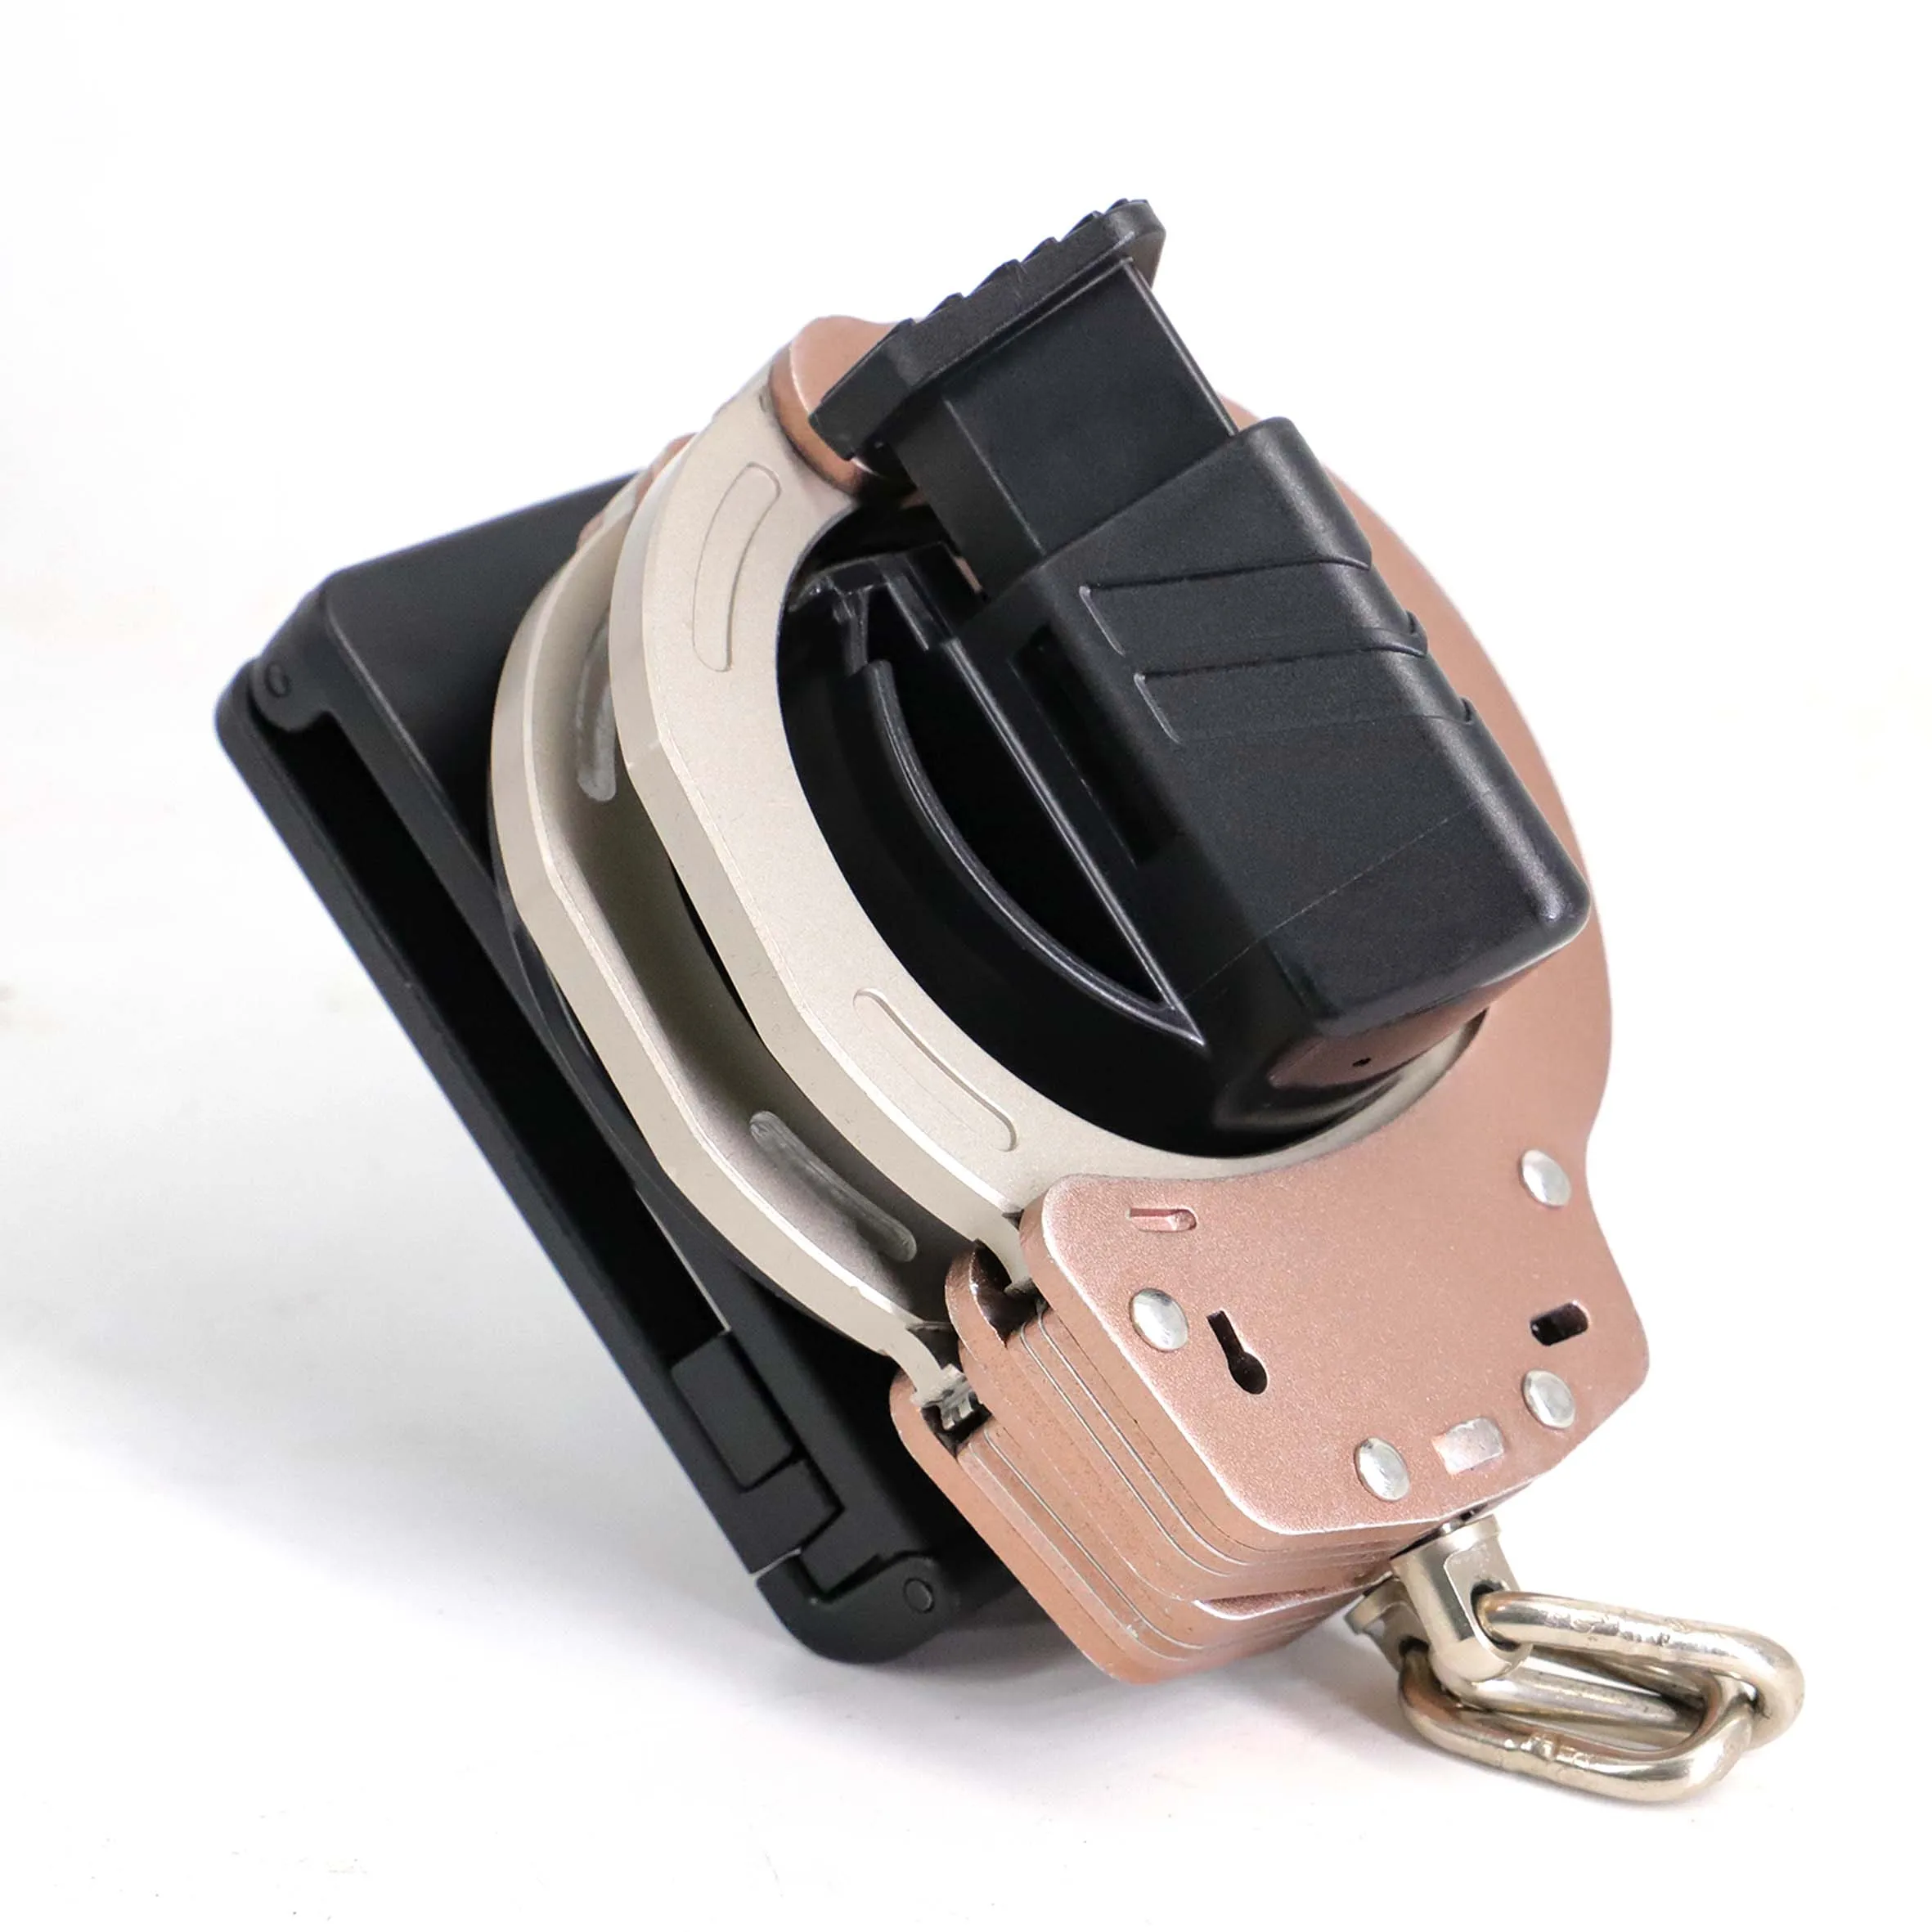 Mixson Hc6 Handcuff Holder Glossybelt Holder for sale online 